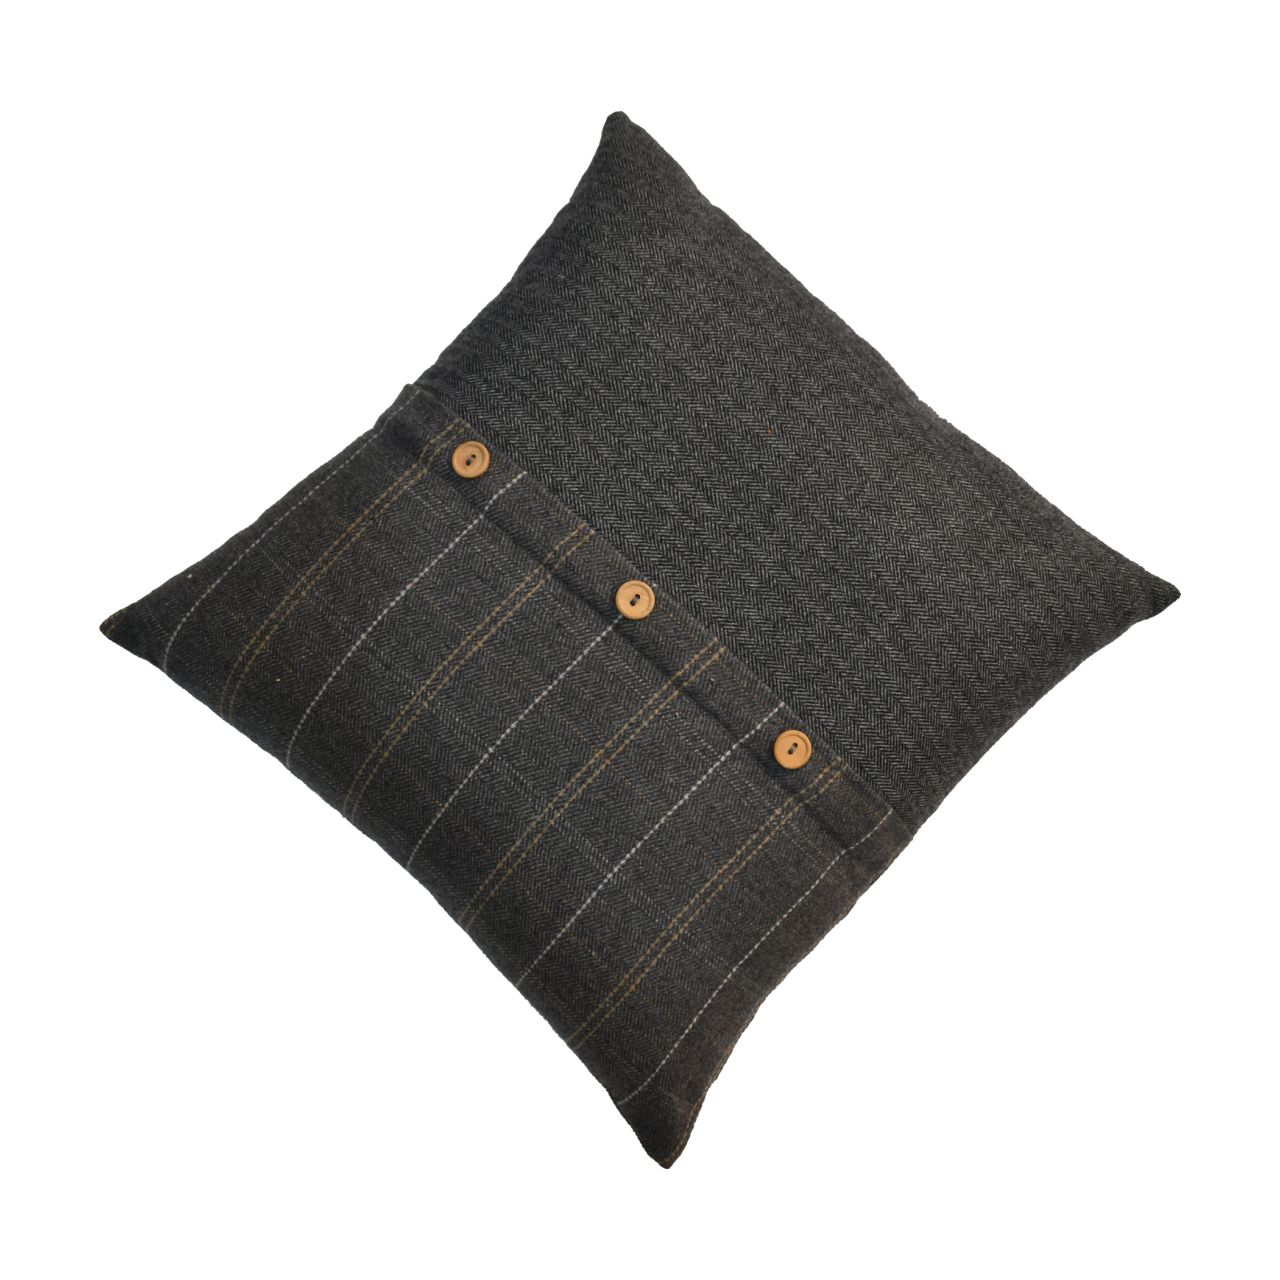 quinn cushion set of 2 pewter black tweed